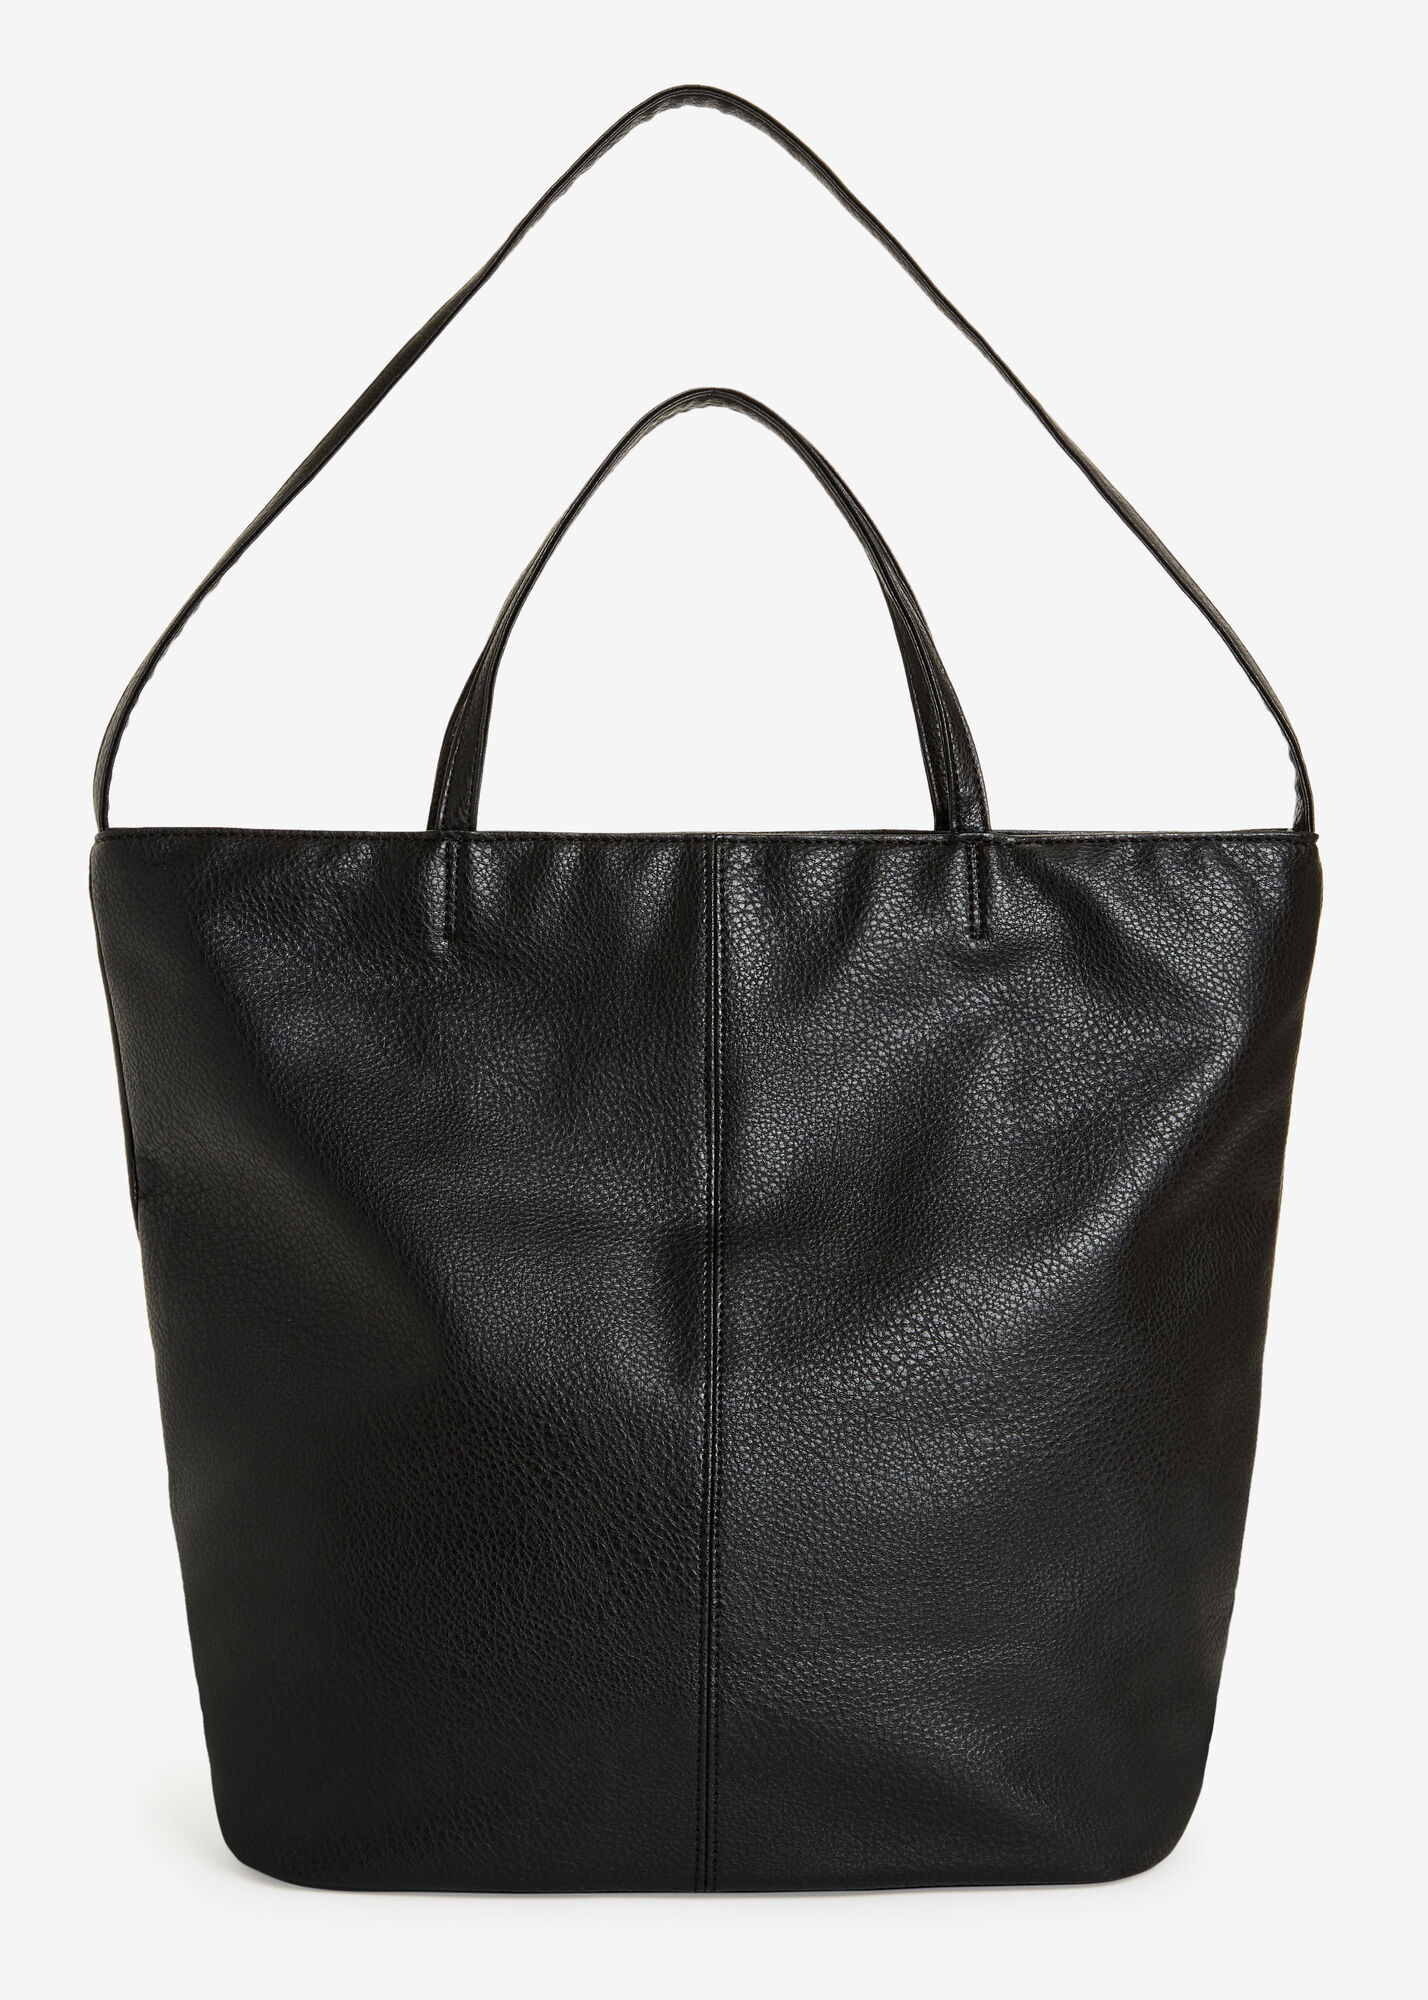 Tote Faux Leather London Fog Handbags Bag Oversized Pebbled Laura